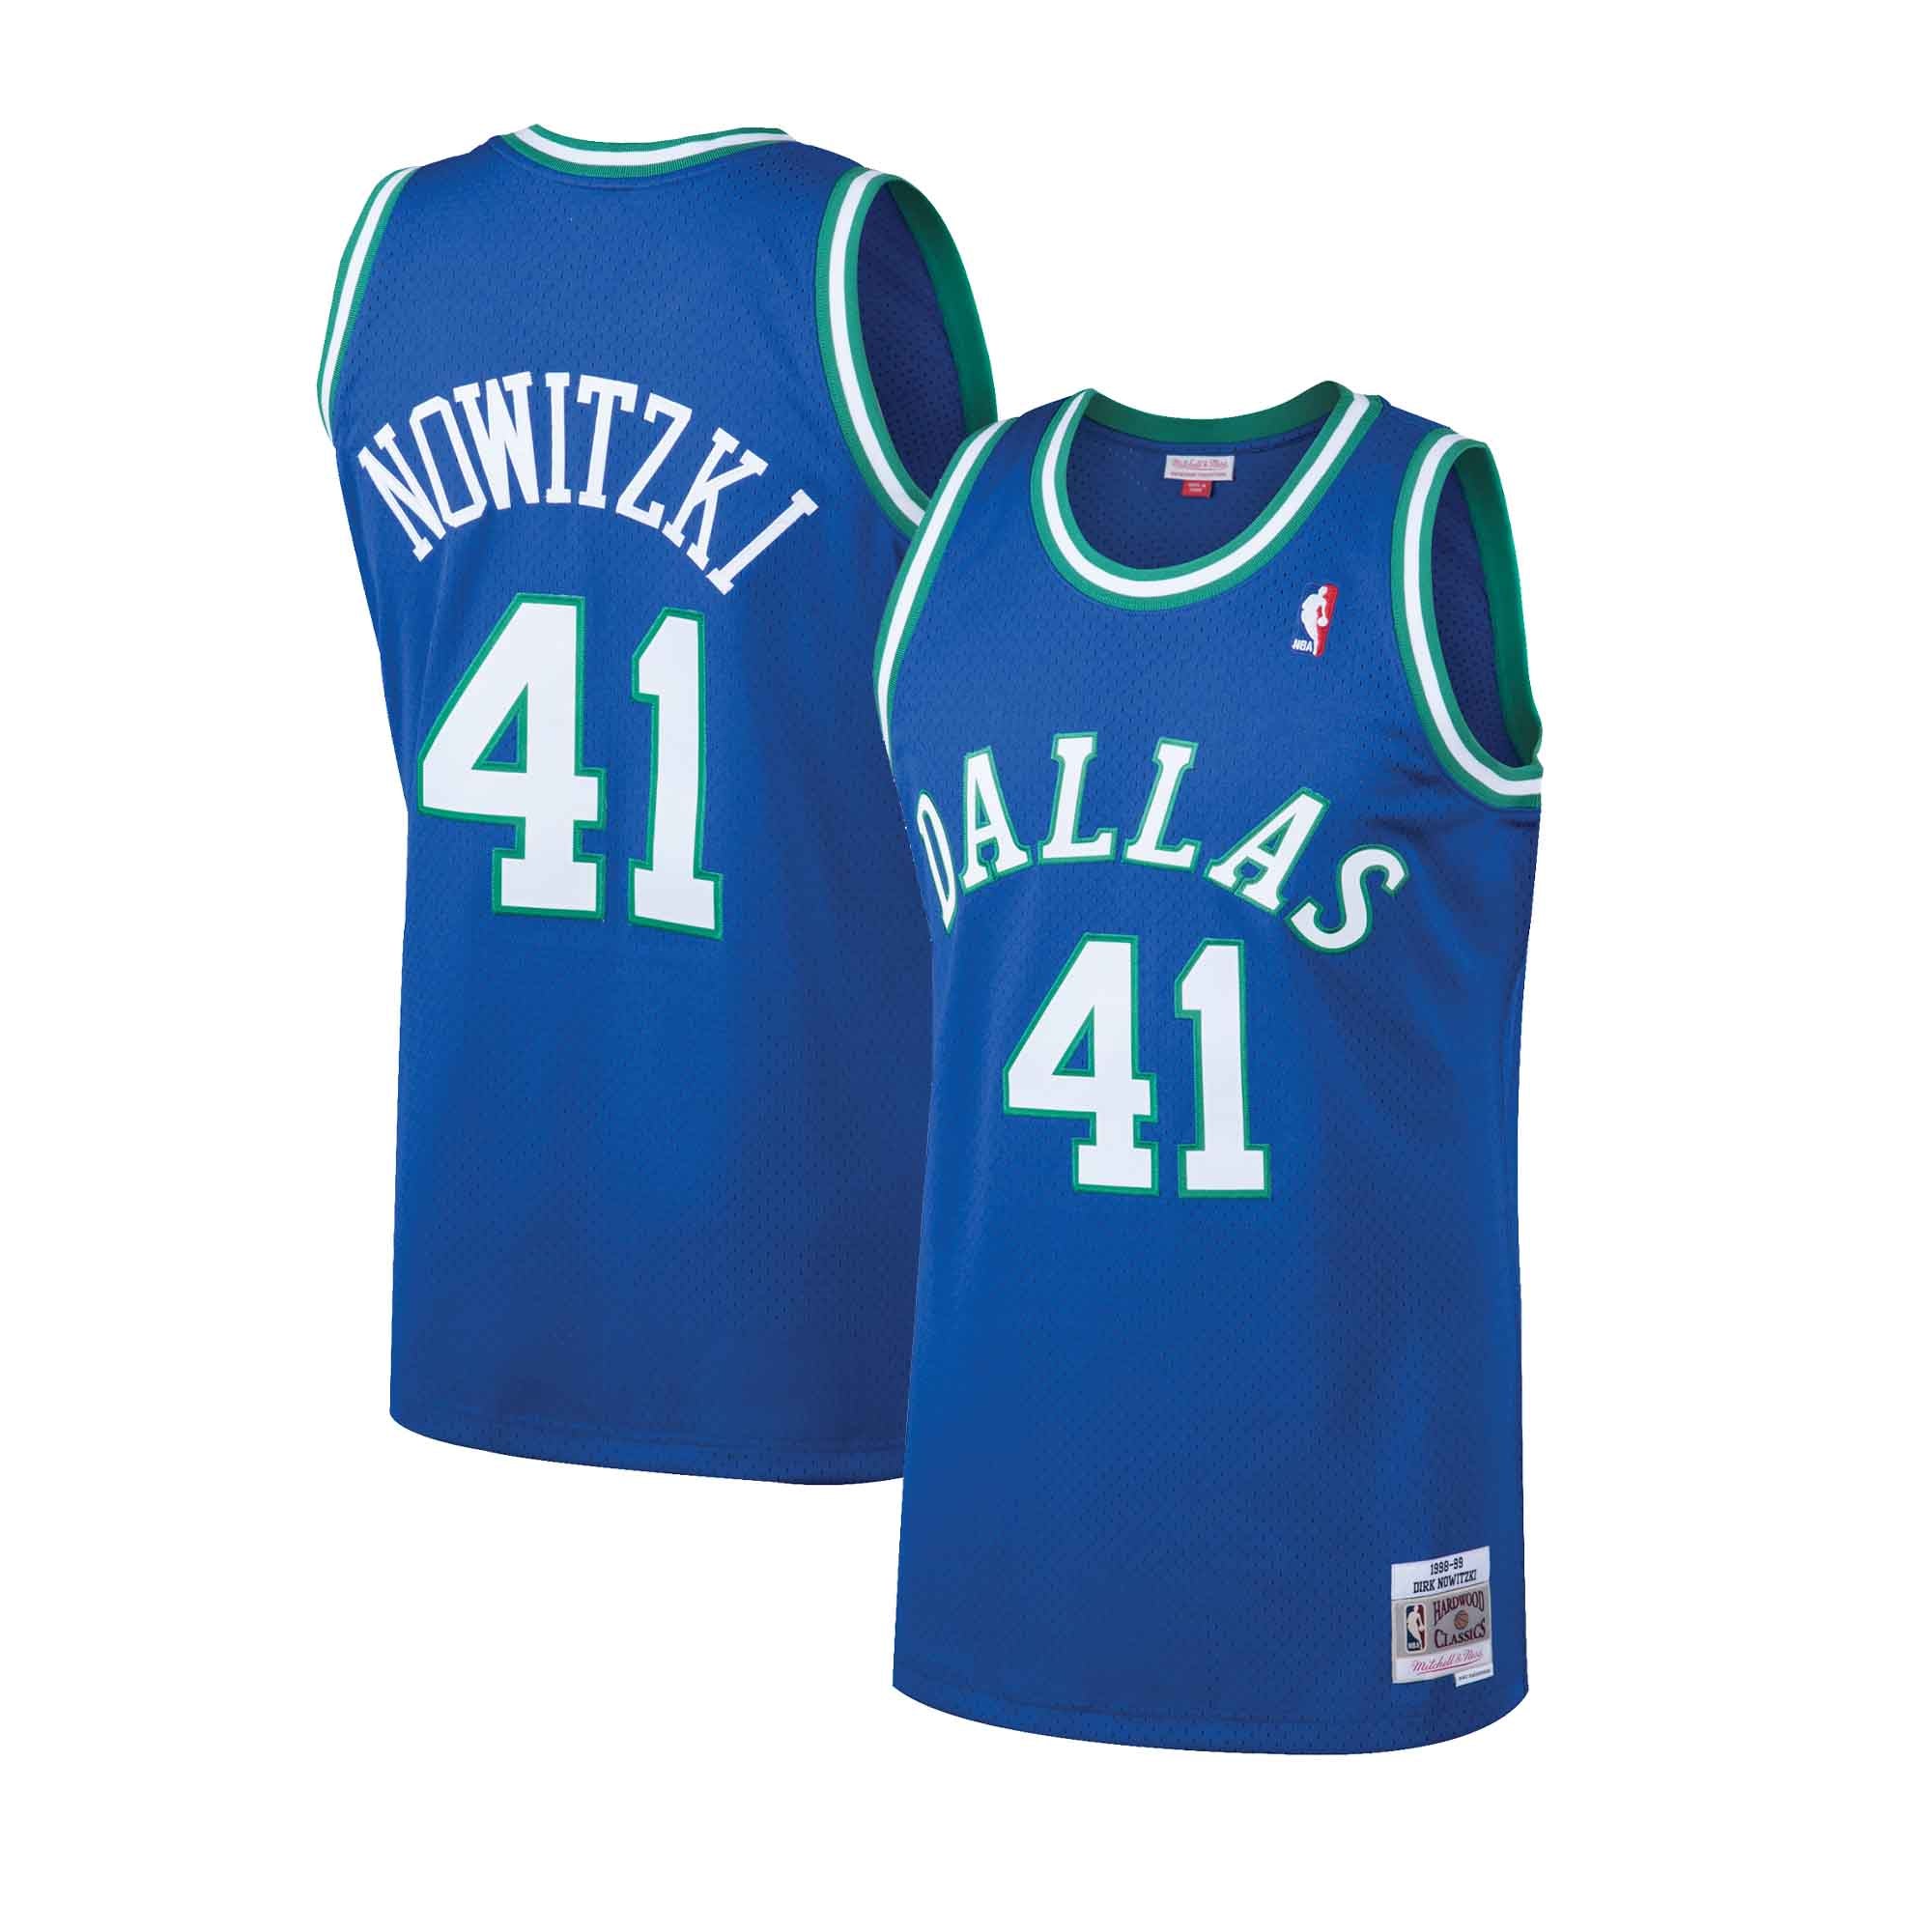 Adidas Dallas Mavericks Mavs #41 Dirk Nowitzki NBA Jersey Mens Size Small  Black